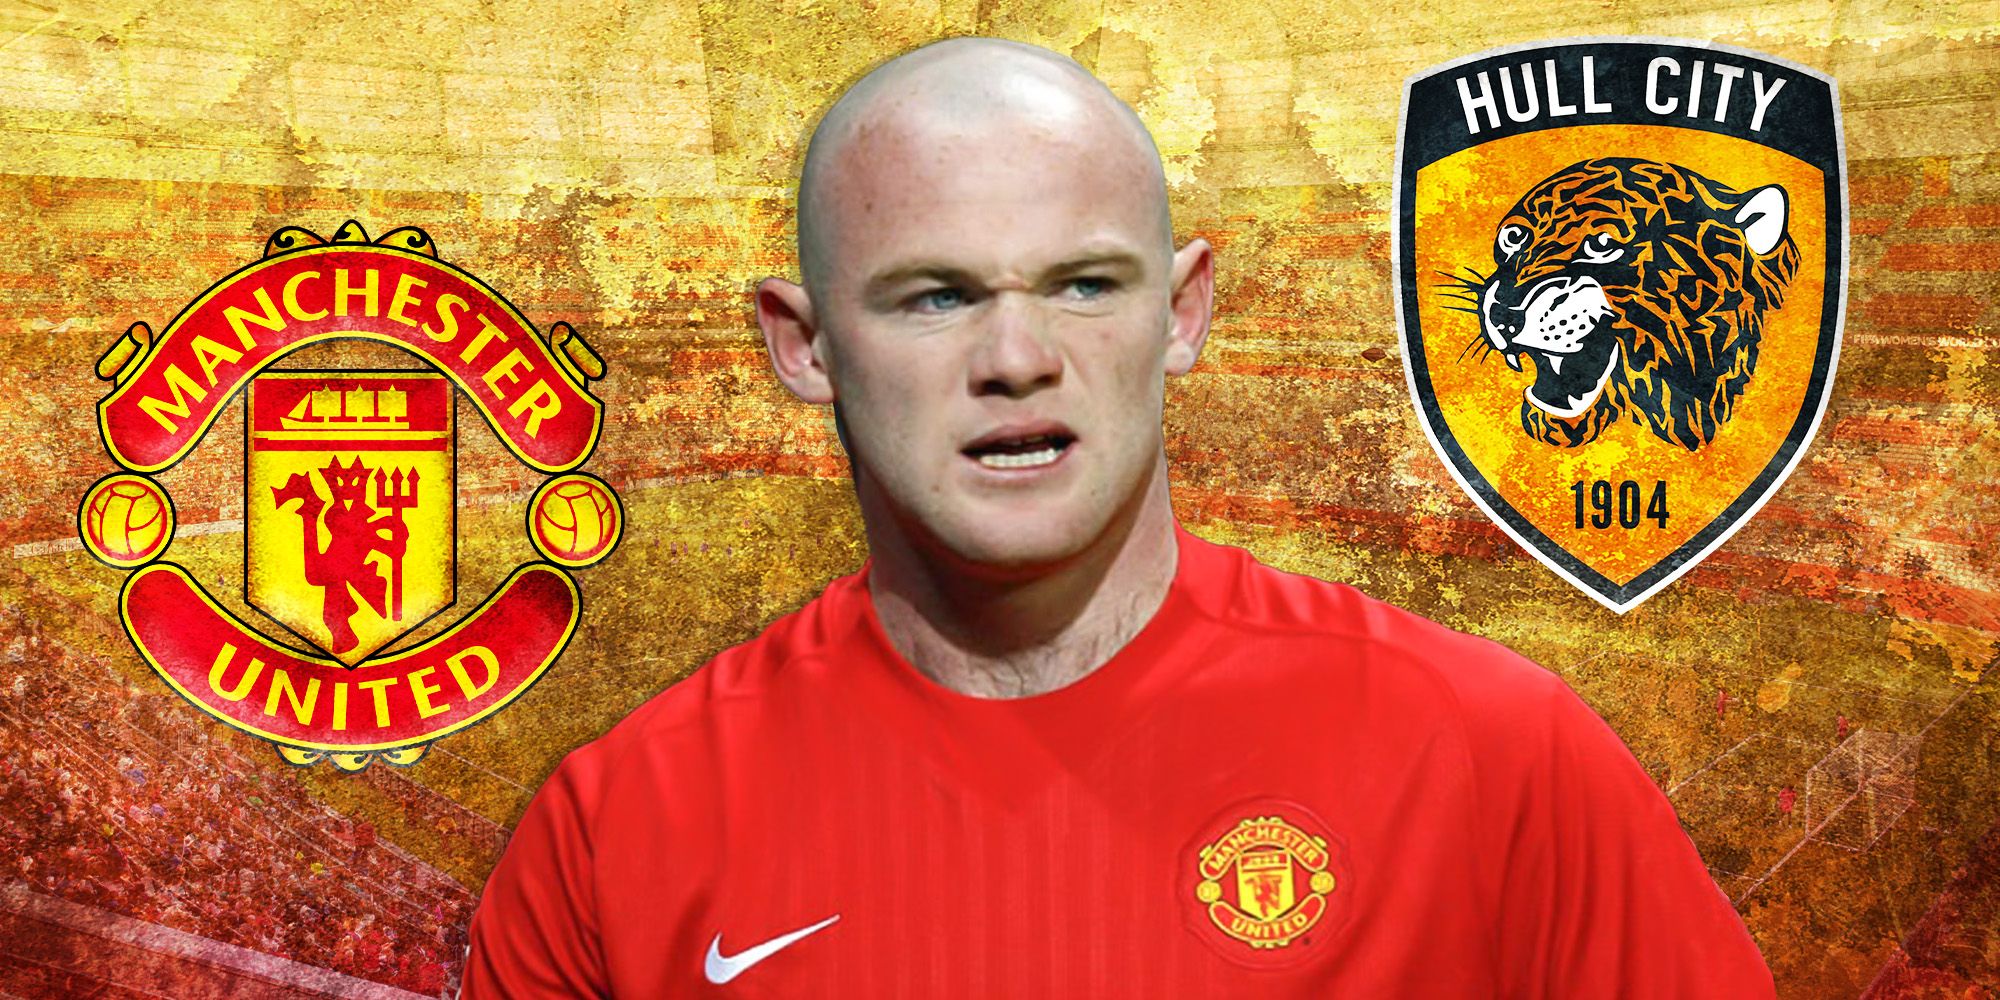 Wayne Rooney at Manchester United with Man United and Hull City logos